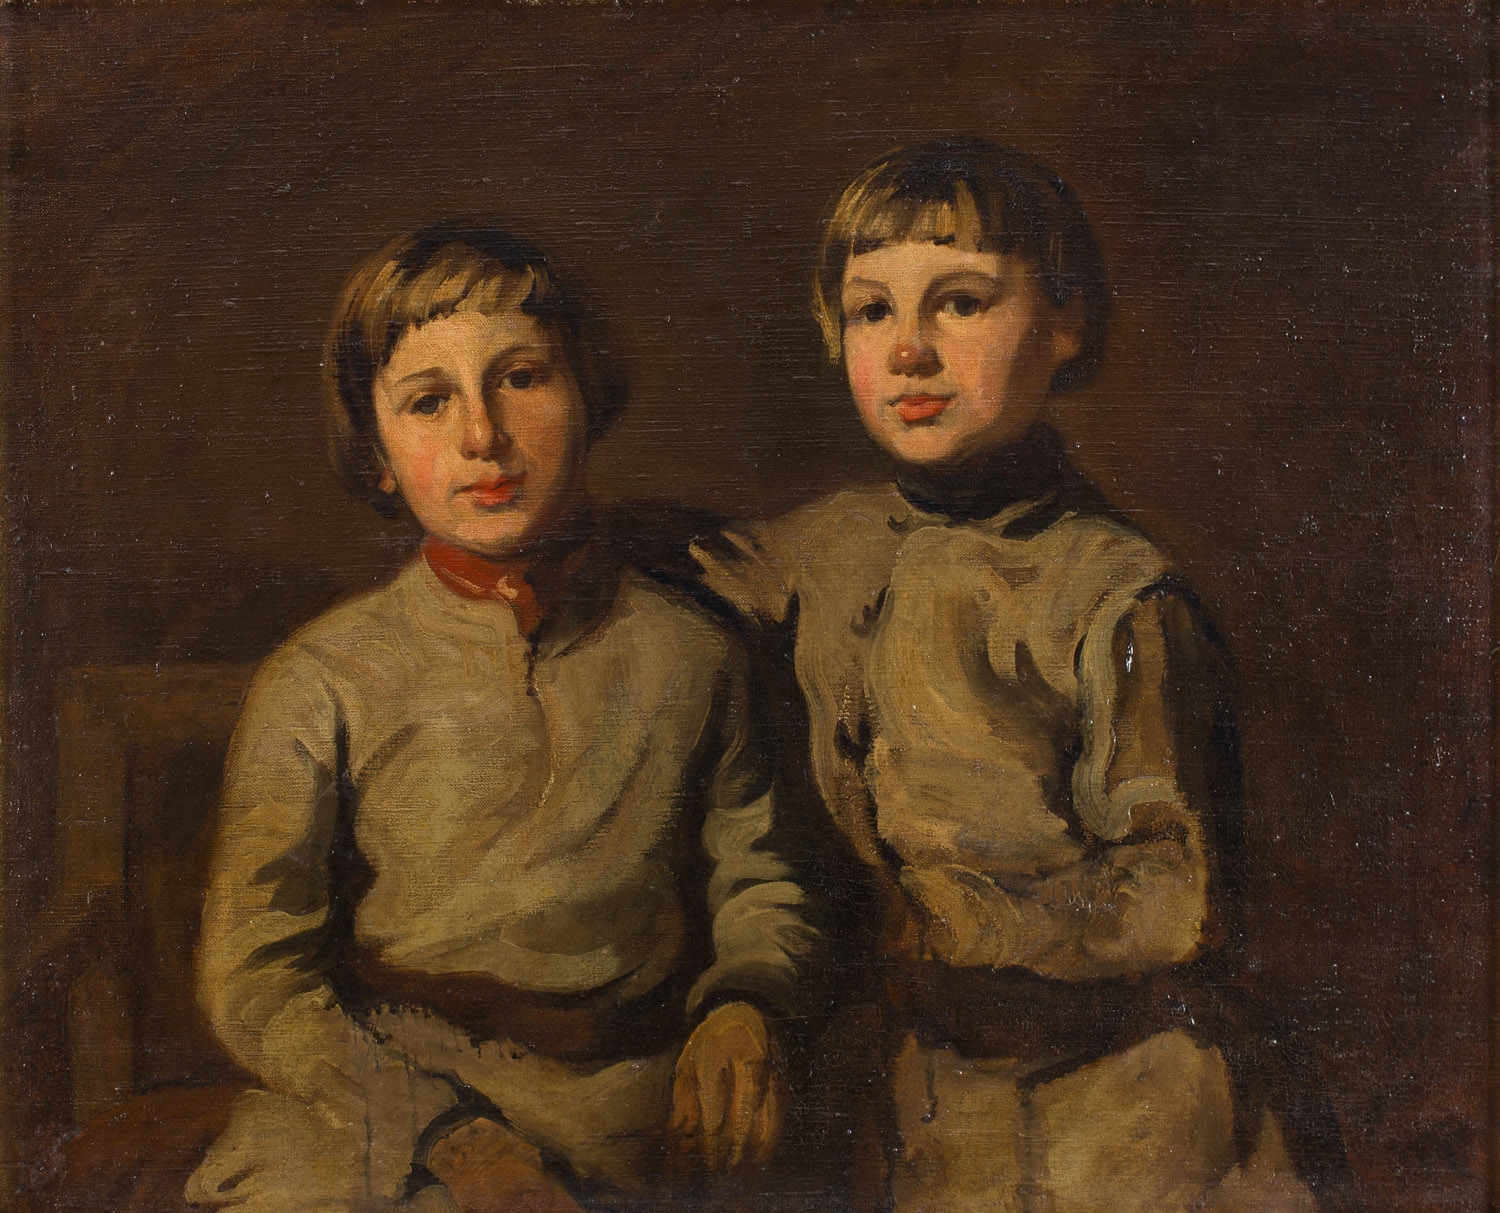 Artwork by Piotr Michałowski, Portrait of Józef and Roman Michałowski, artist's nephews, Made of oil/canvas